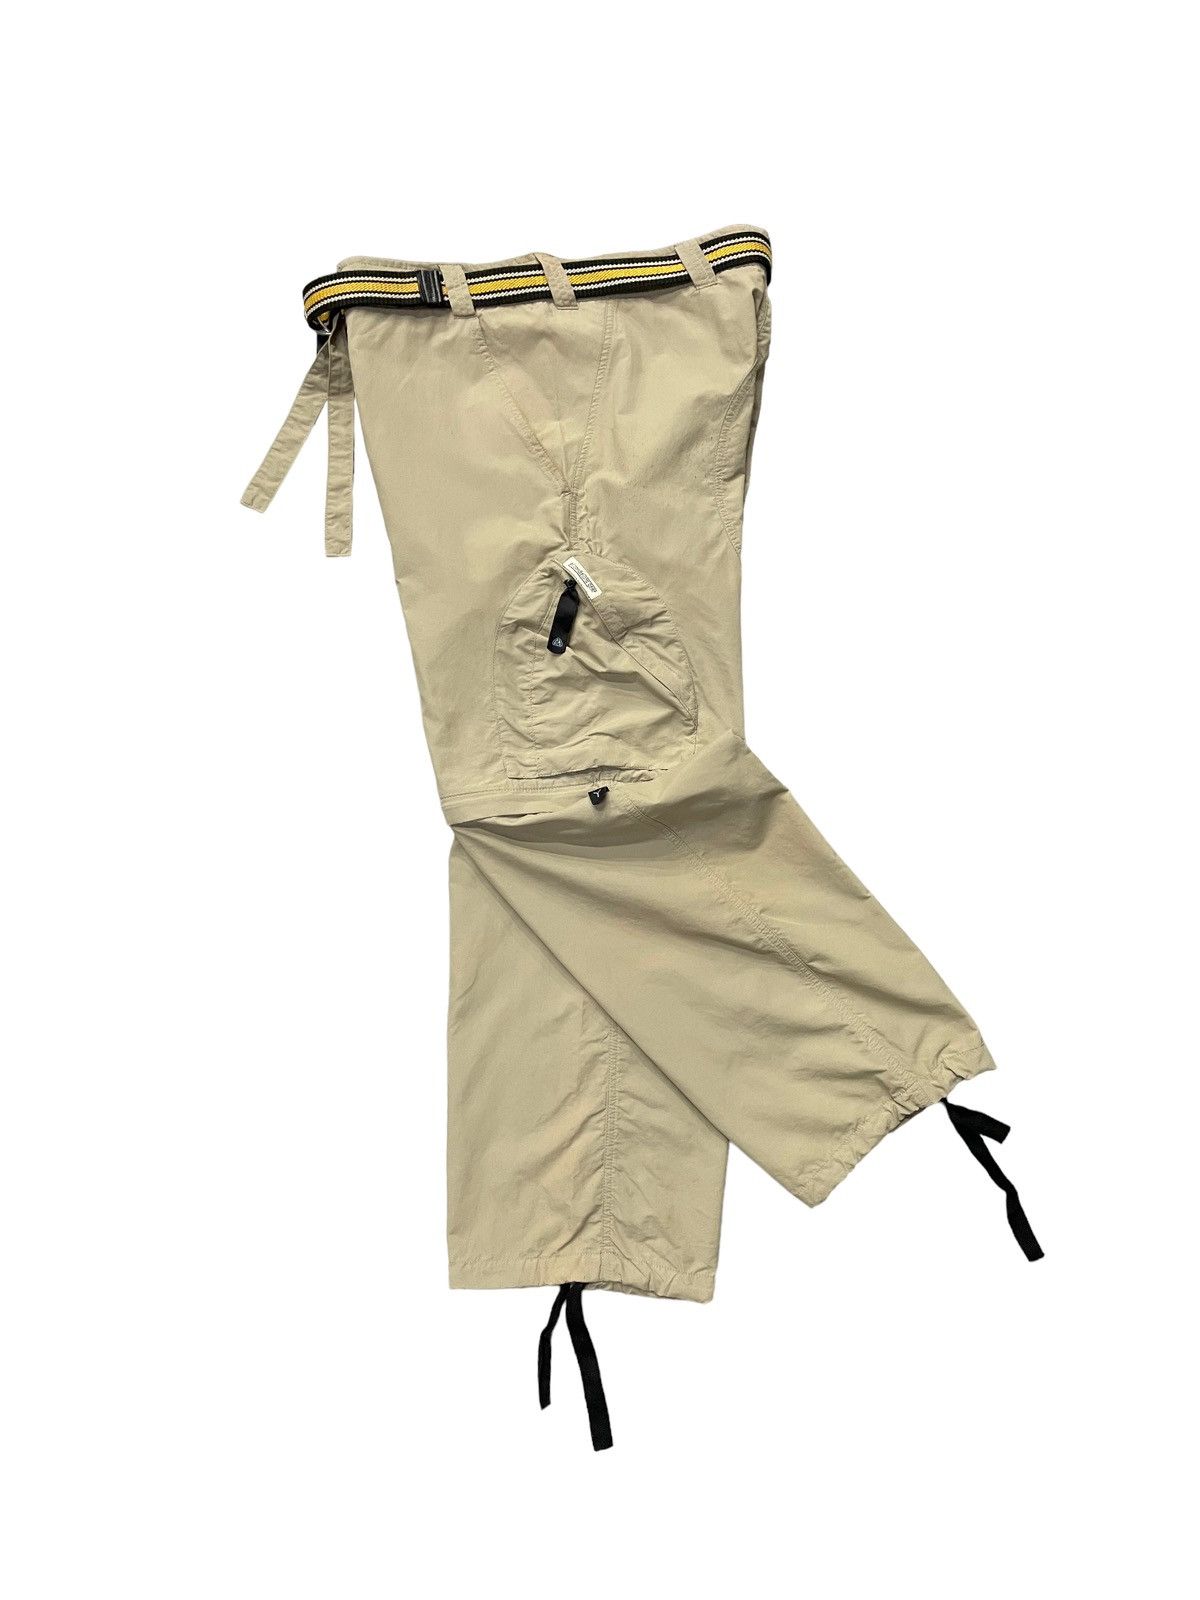 Vintage Vintage Nike ACG Convertible Trail Cargo Pants With Belt Size US 32 / EU 48 - 3 Thumbnail